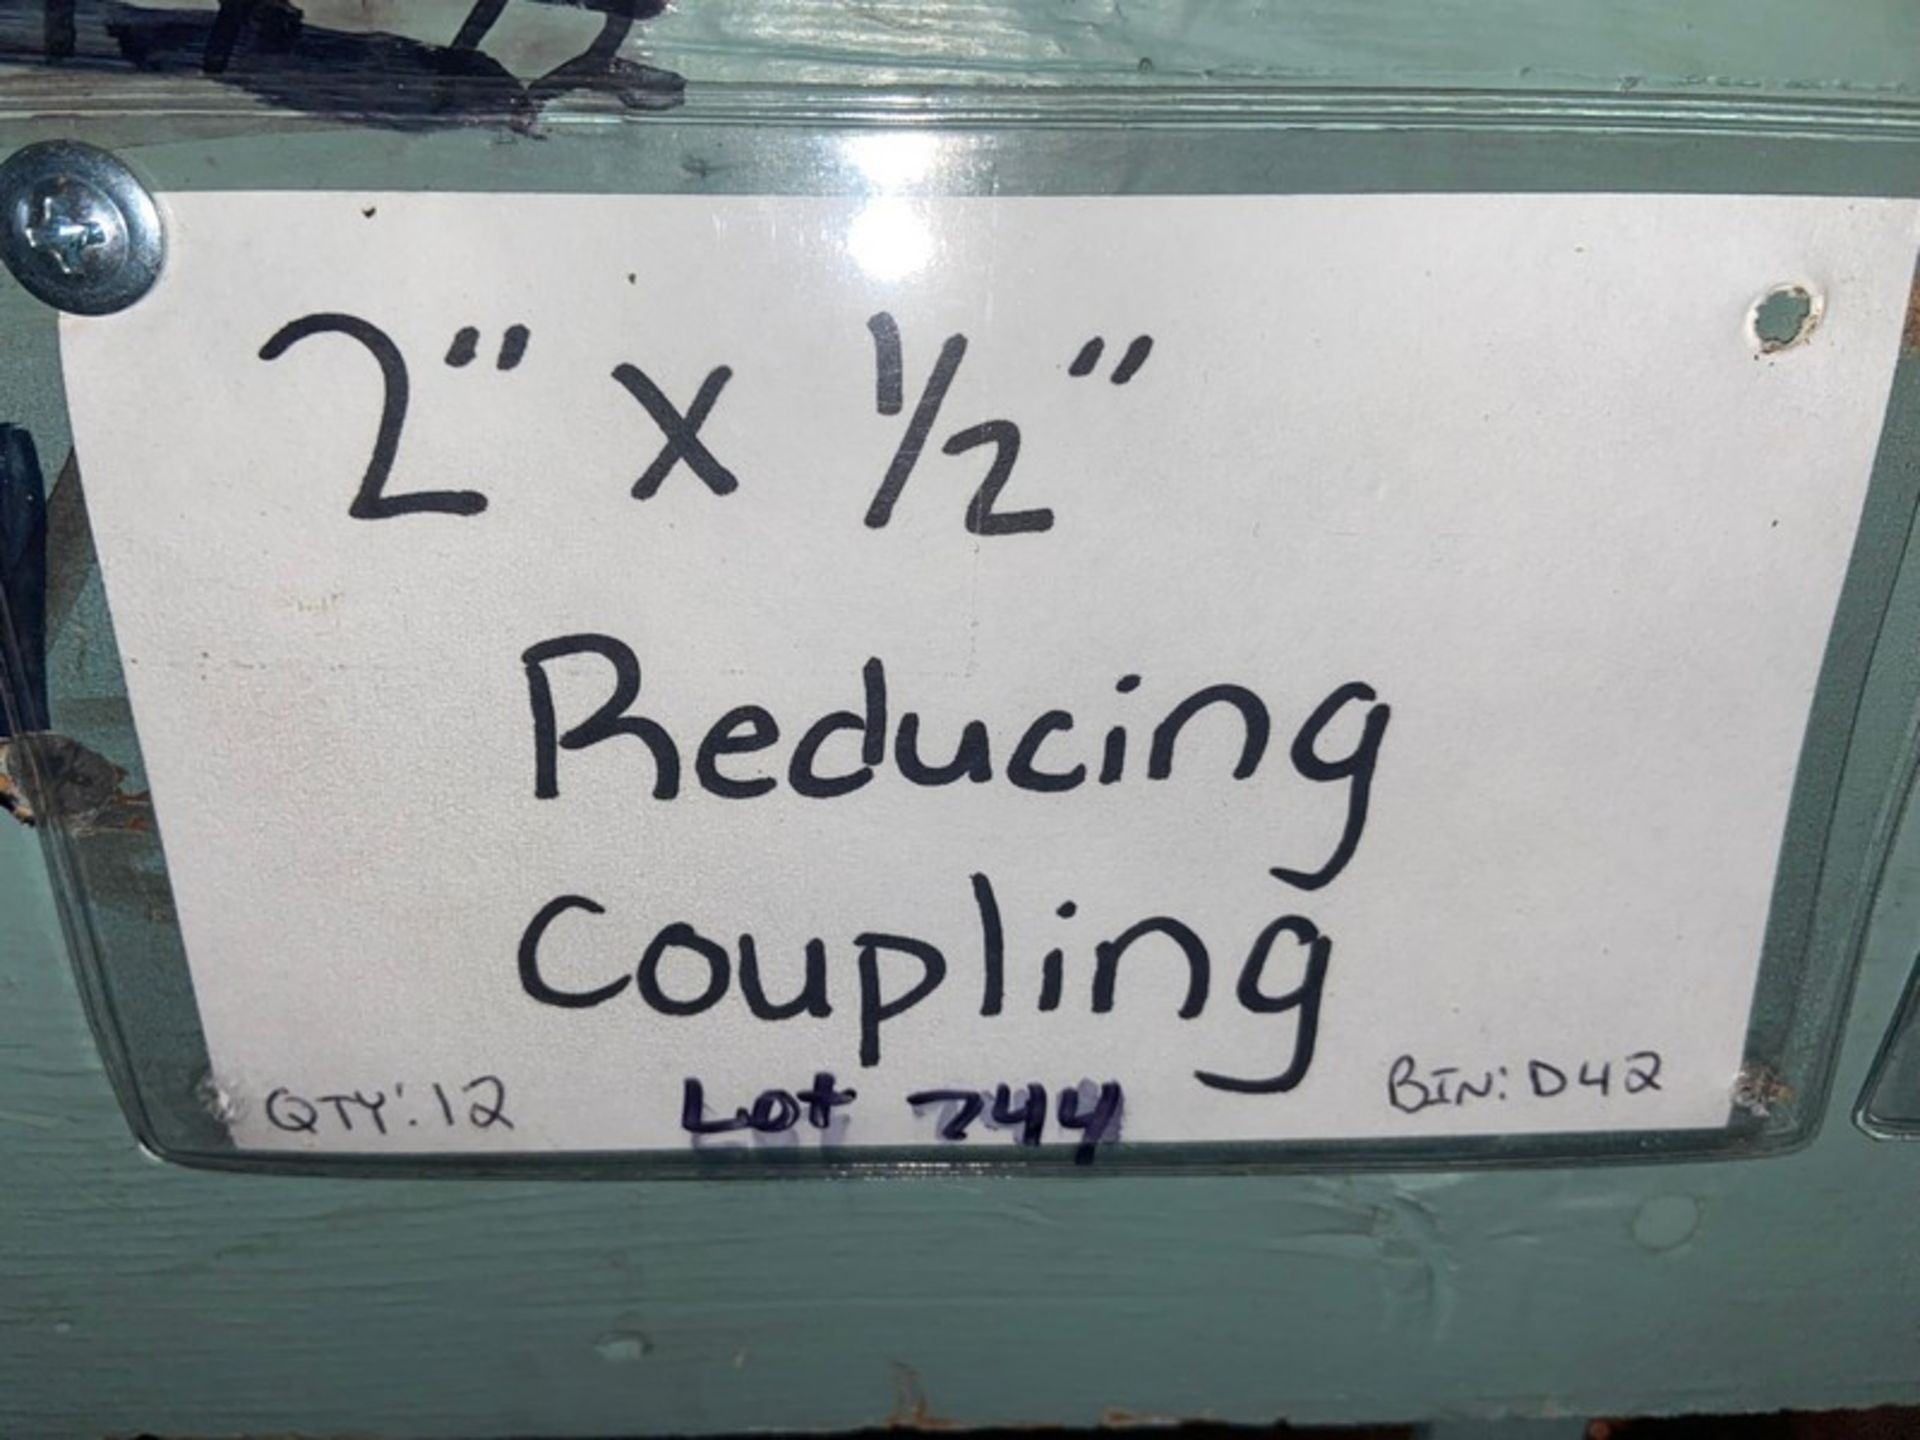 (12)2”x 1/2” Reducing Coupking (Bin:D42); (3) 2”x 3/4” Reducing Coupling (Bin:D43) (LOCATED IN - Image 2 of 4